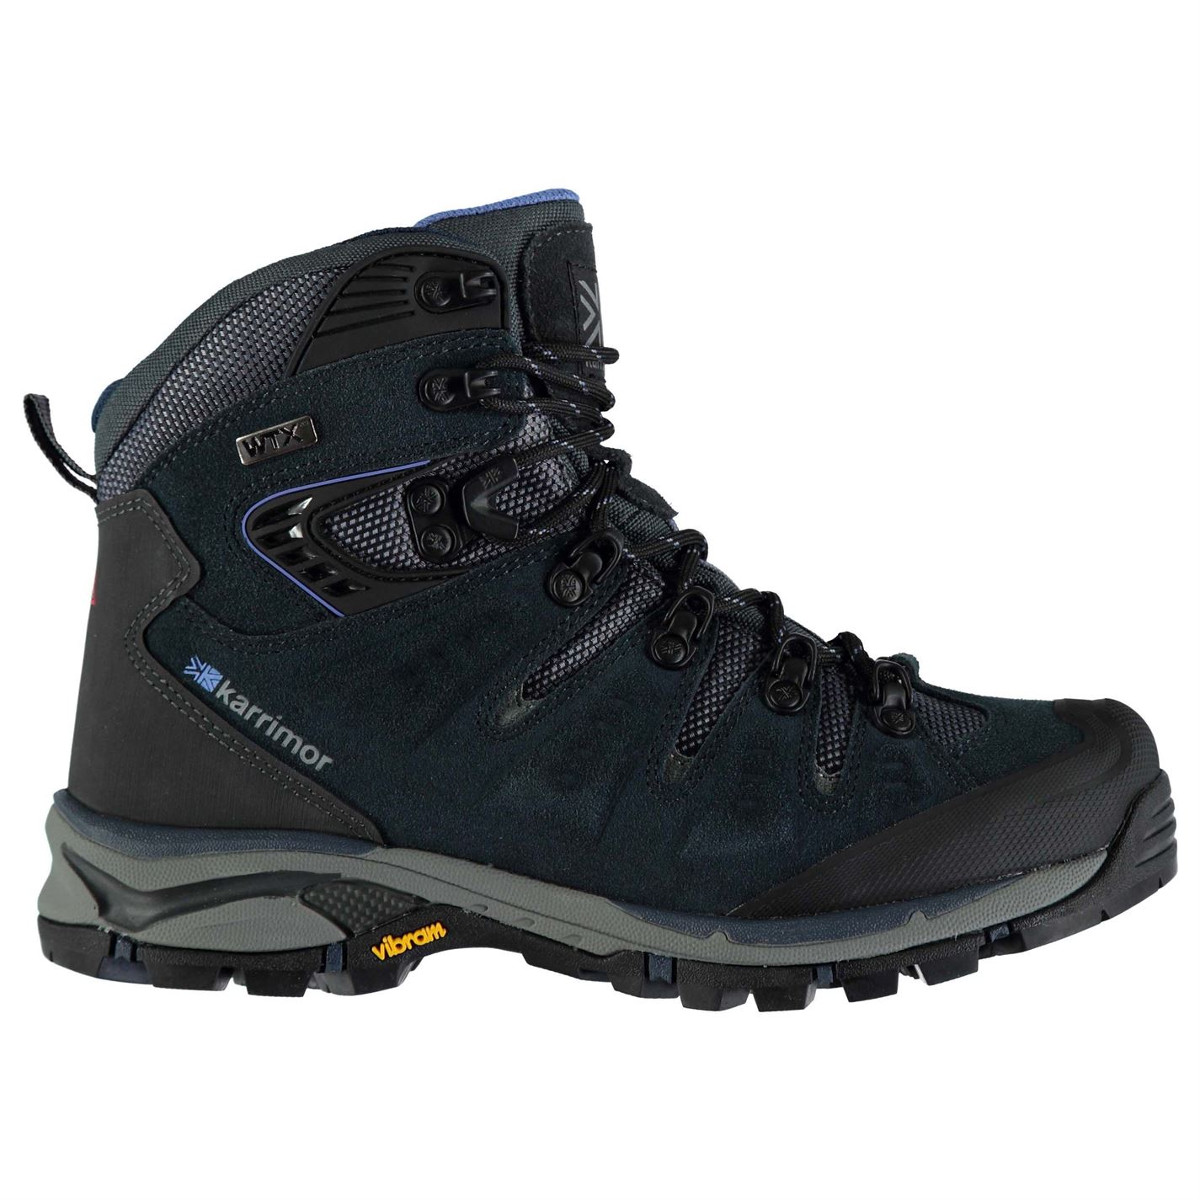 Karrimor Women's Leopard Waterproof Mid Hiking Boots - Black, 9